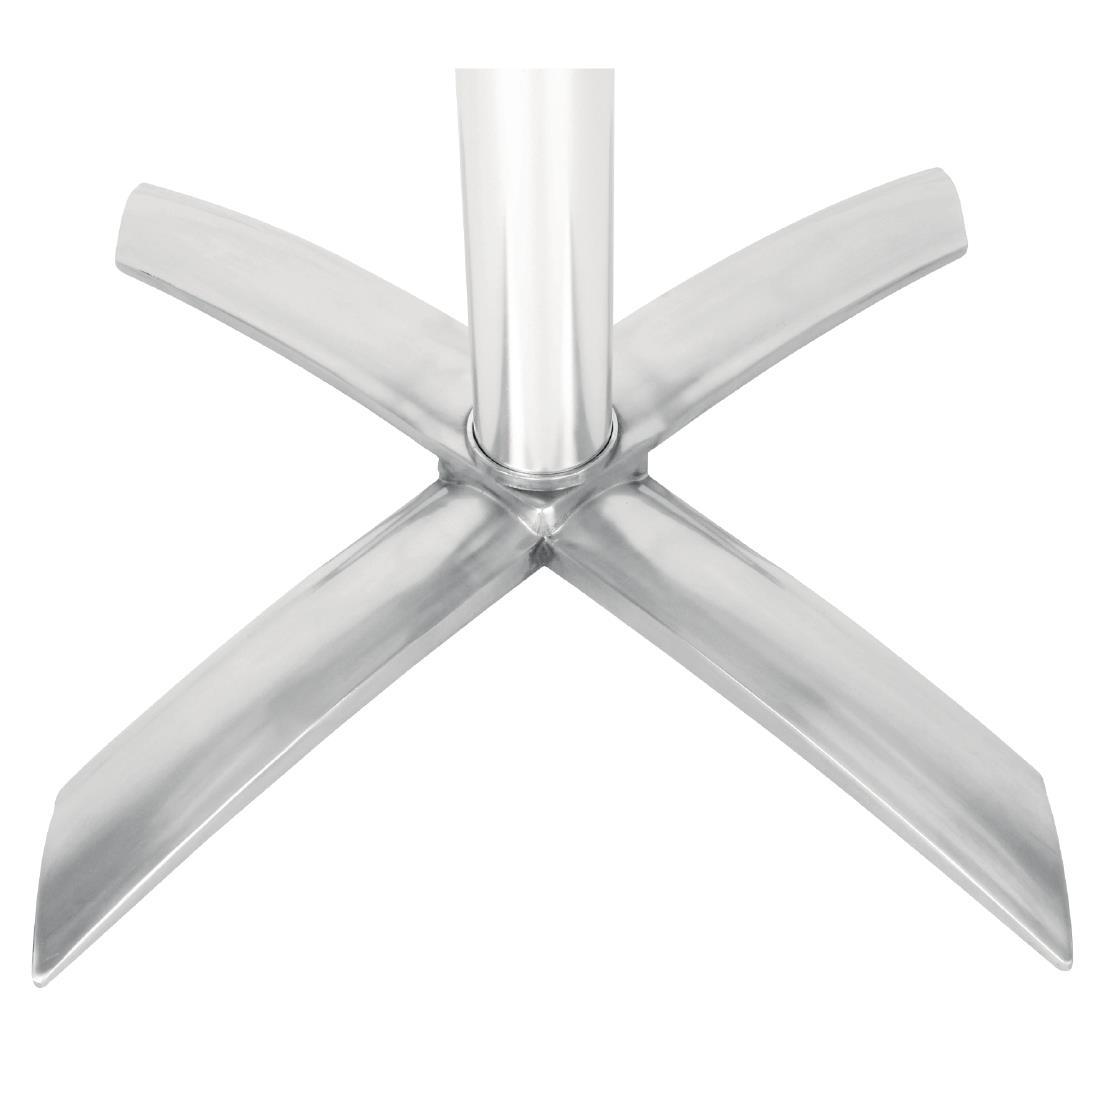 Bolero Flip Top Poseur Table Stainless Steel - GR396  - 4